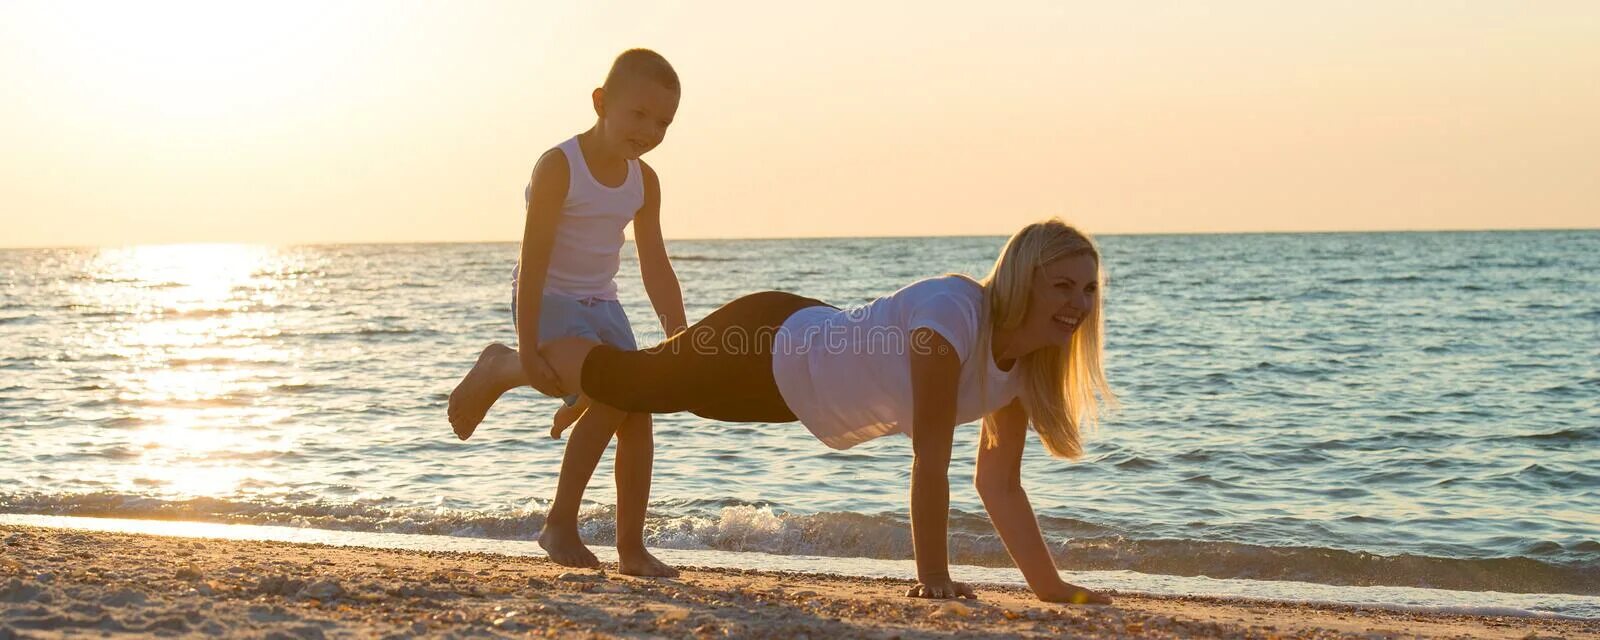 Маме массаж ног на пляже. Йога мама и дочь на пляже. Массирвет мамку на пляже. Сын массажист маме на пляже.